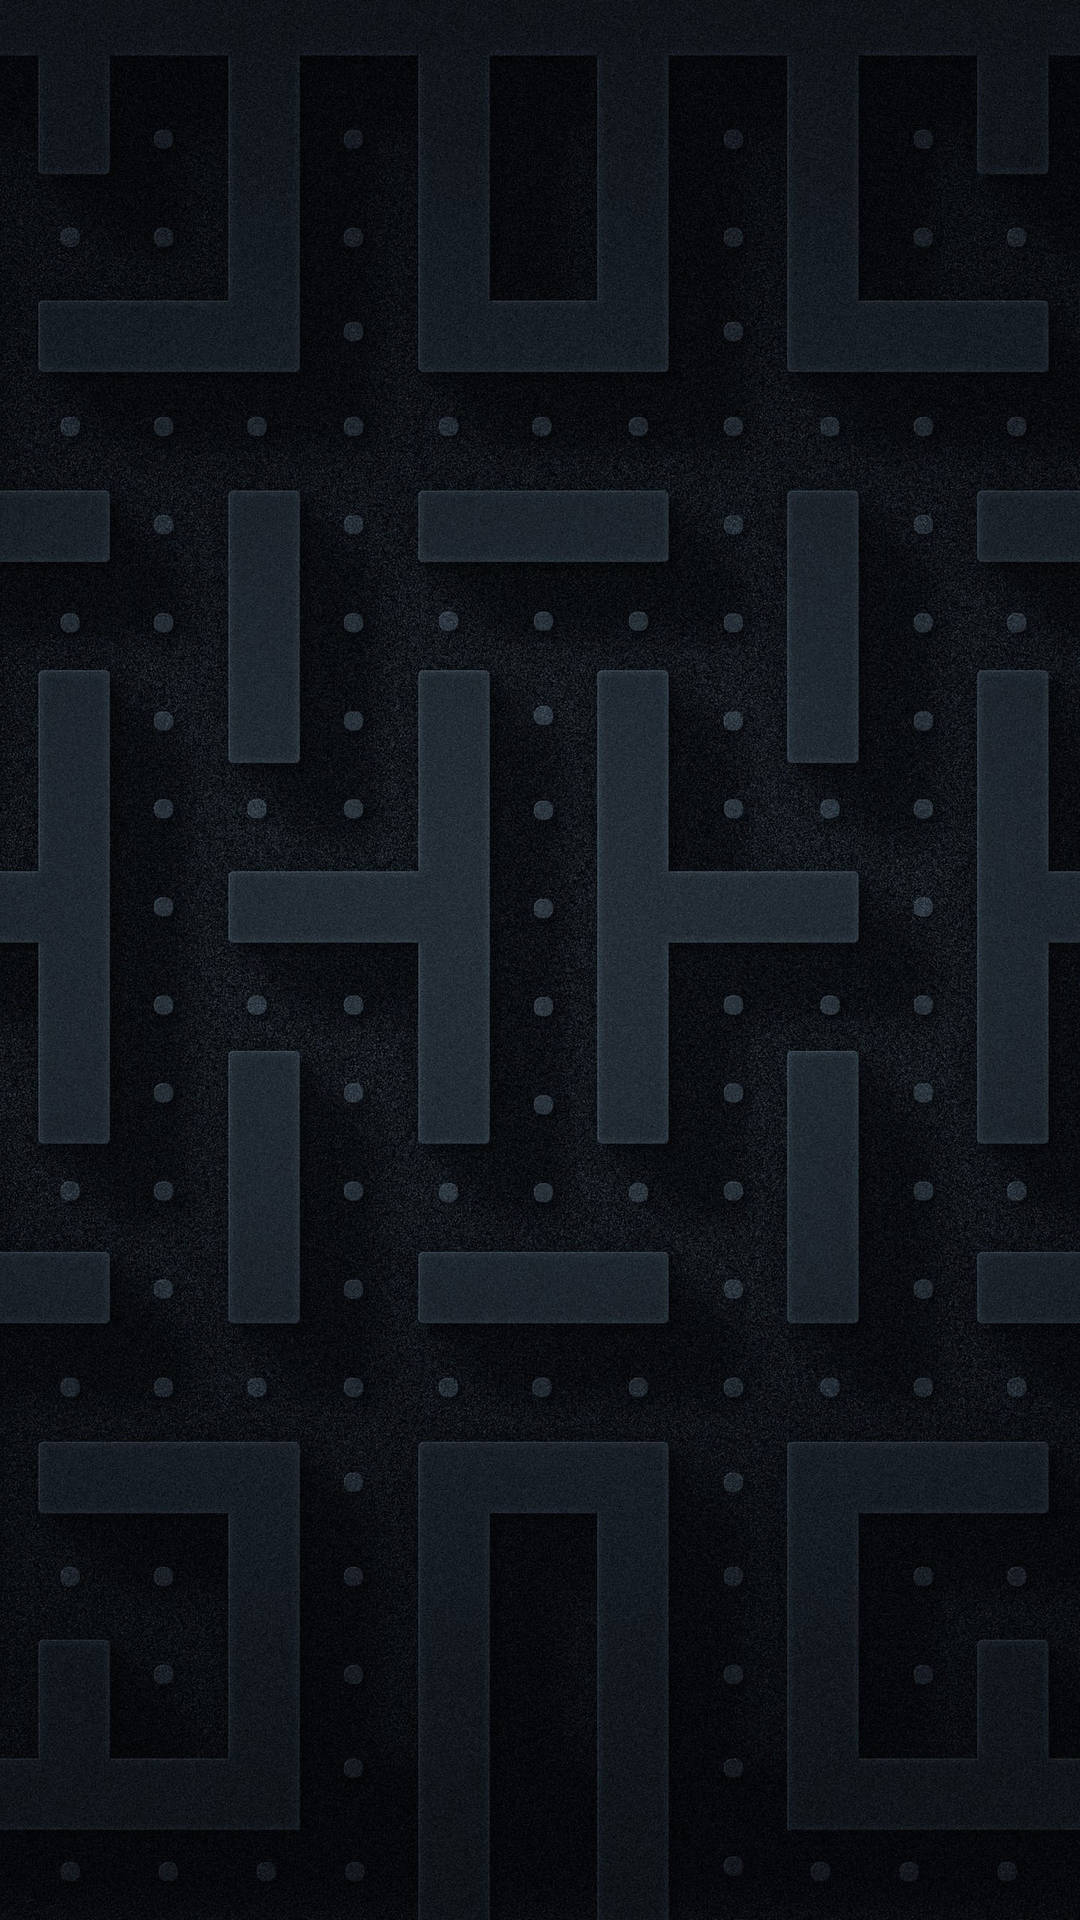 Abstract 3d Maze Minimalist Black Phone Wallpaper